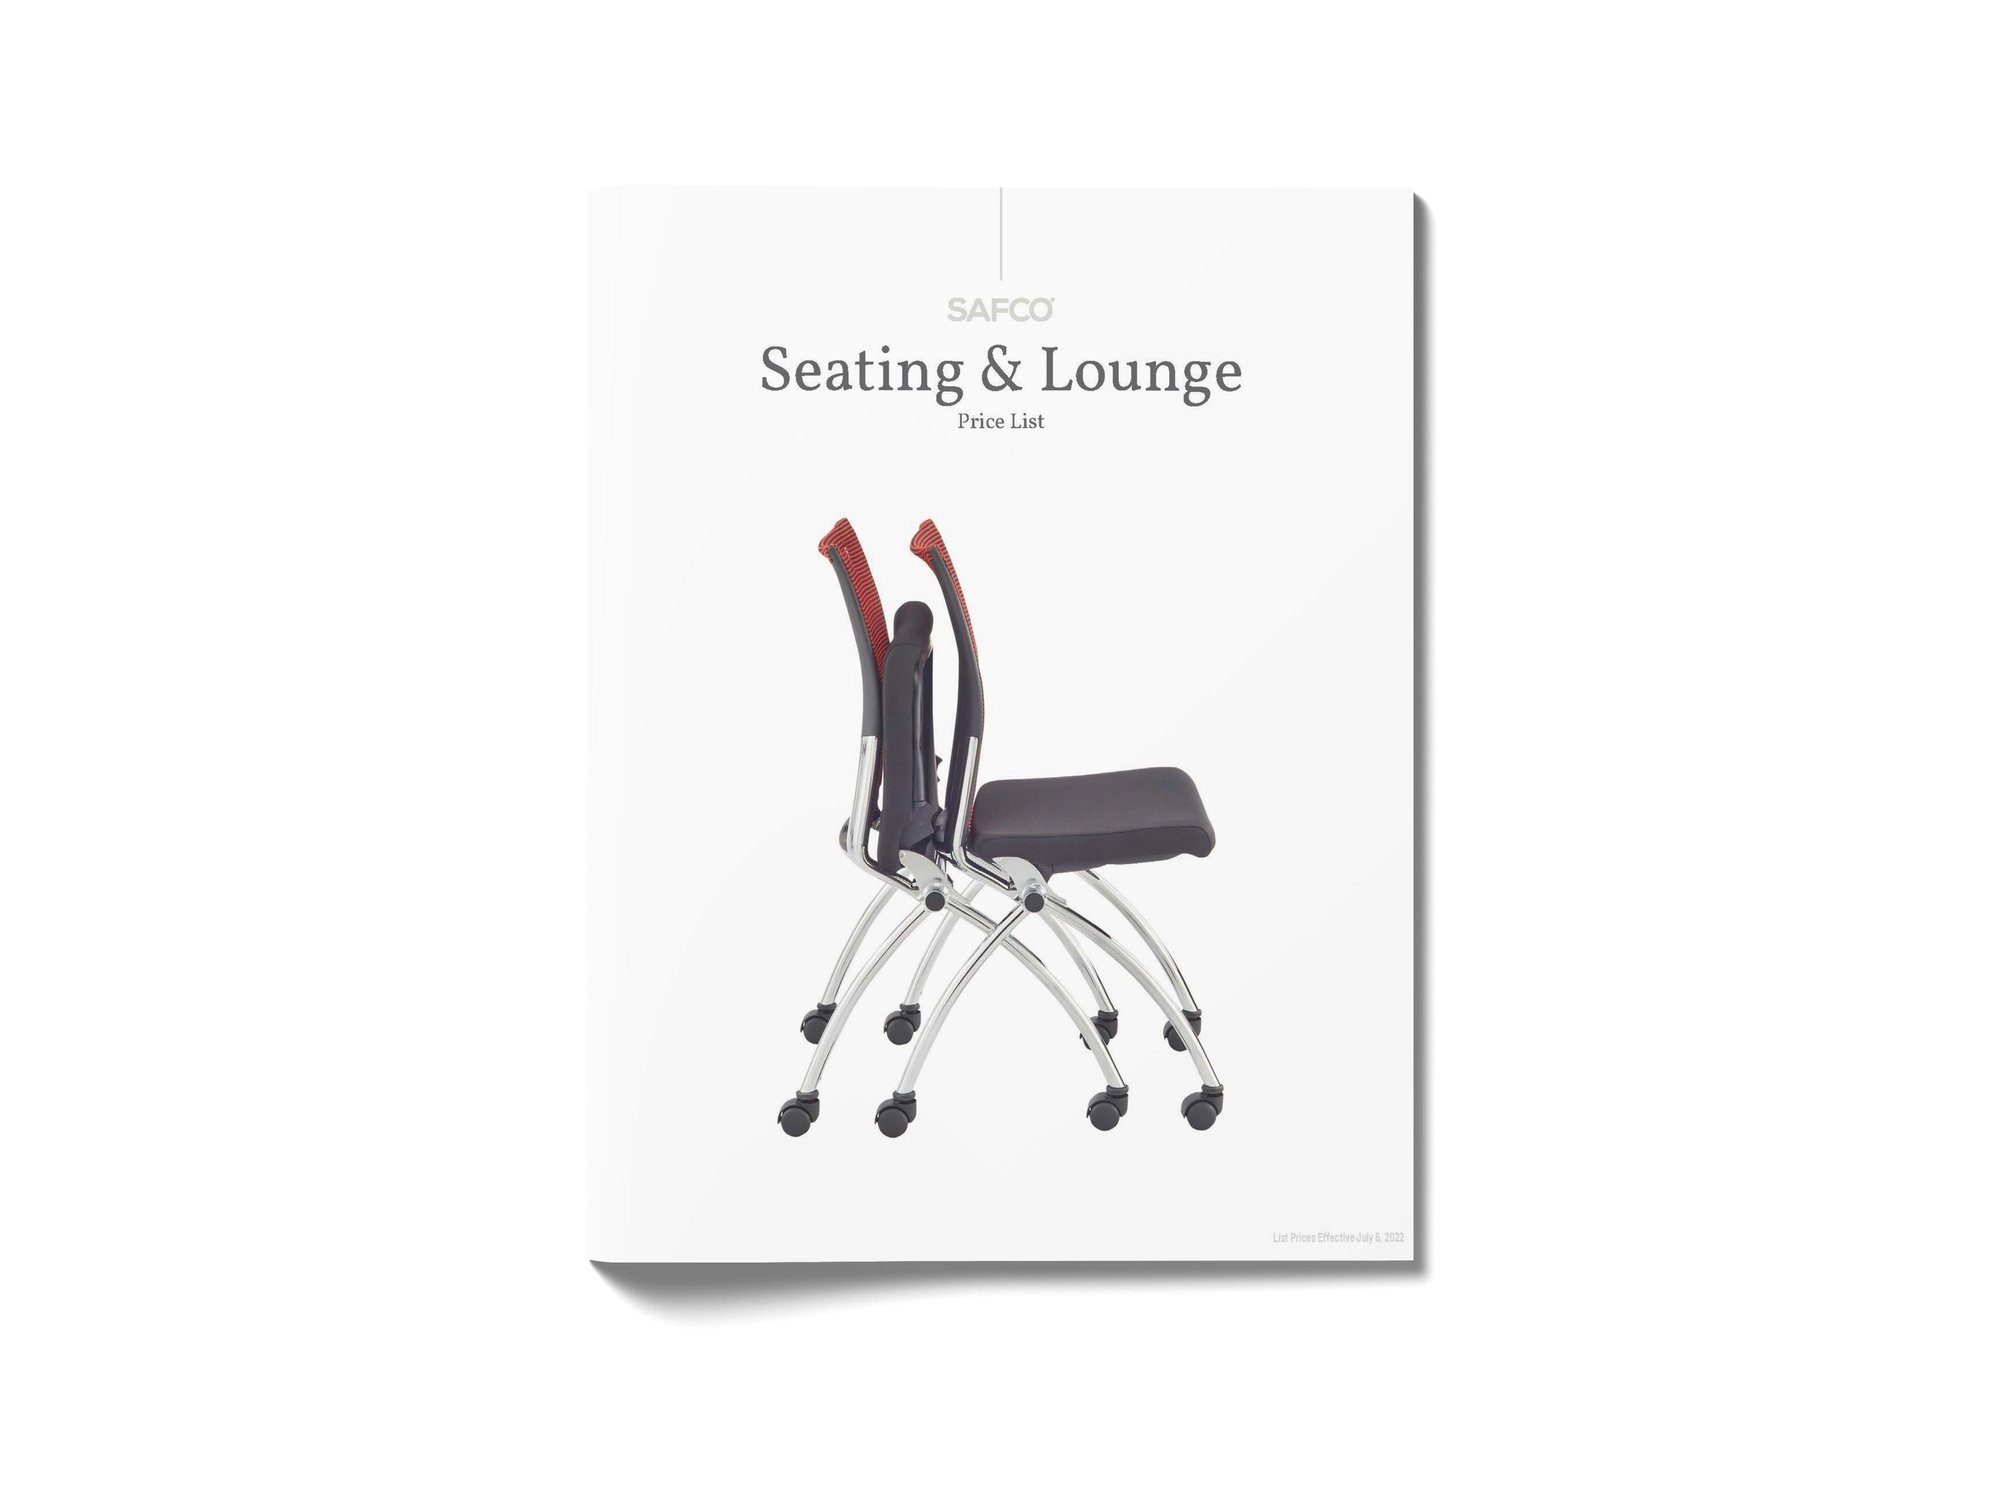 Safco_Seating and Lounge_Price List